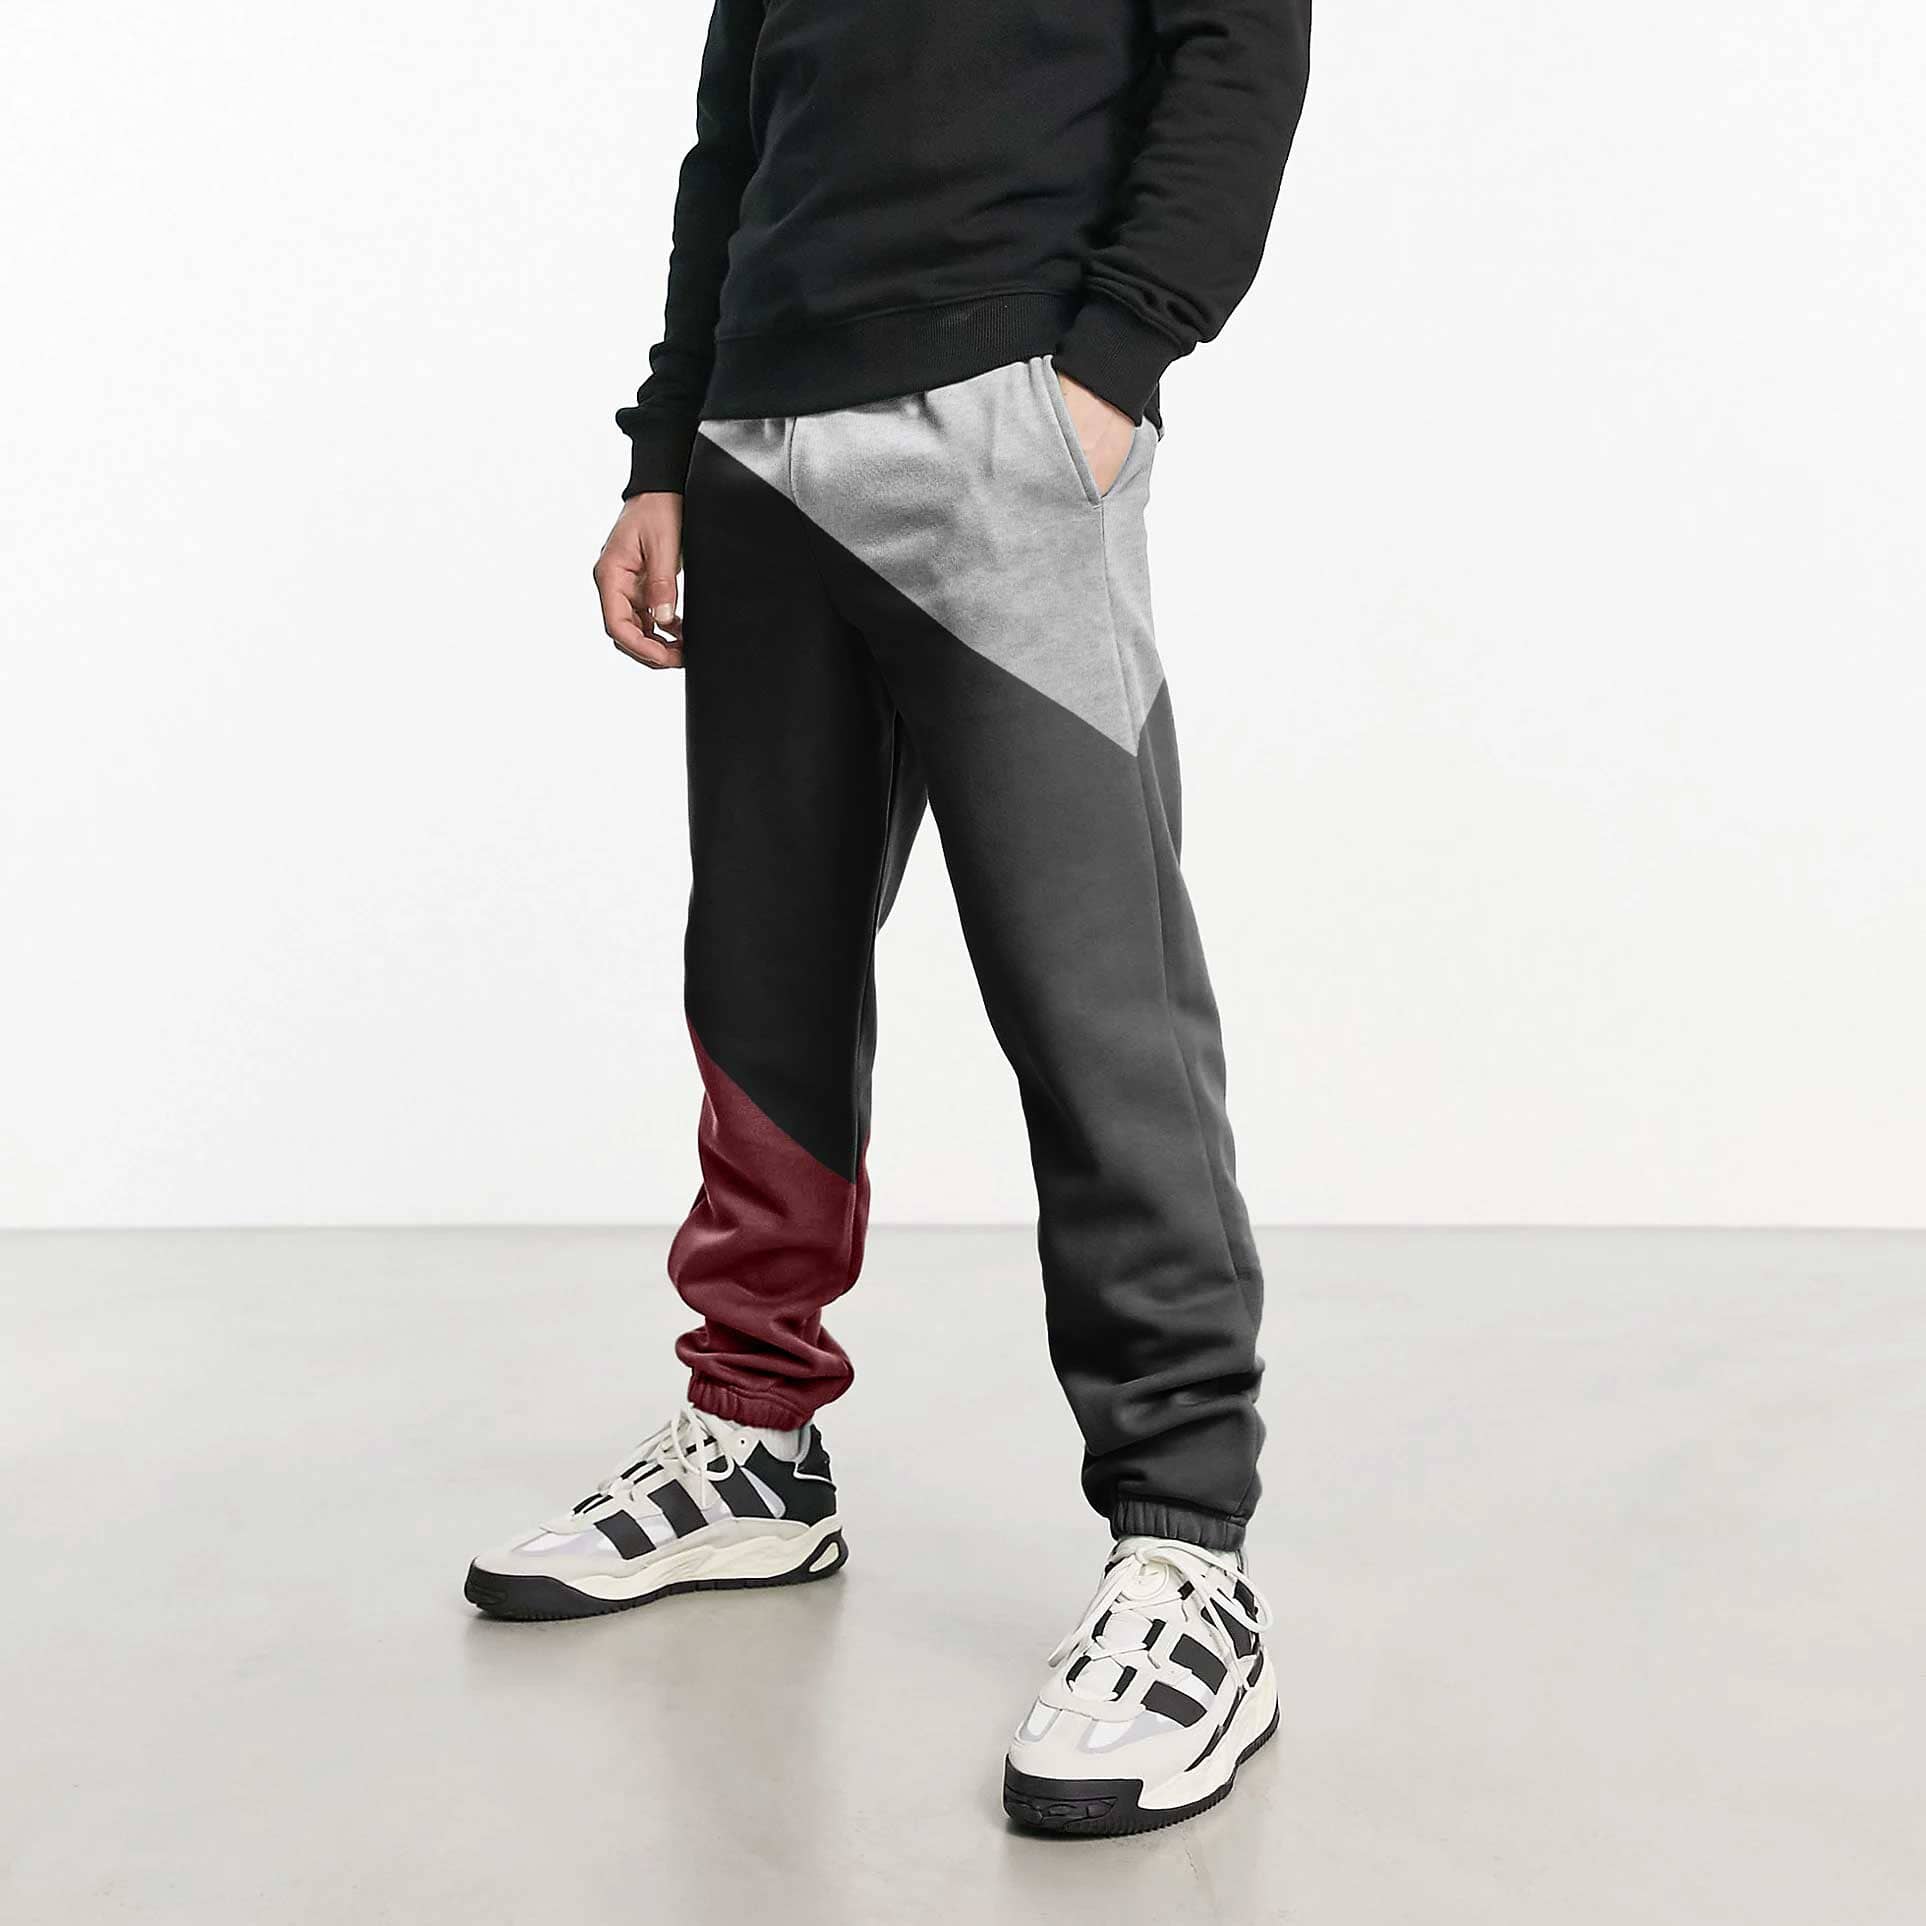 MAX 21 Men's Contrast Design Betim Sweat Pants Men's Trousers SZK Black & Heather Grey S 